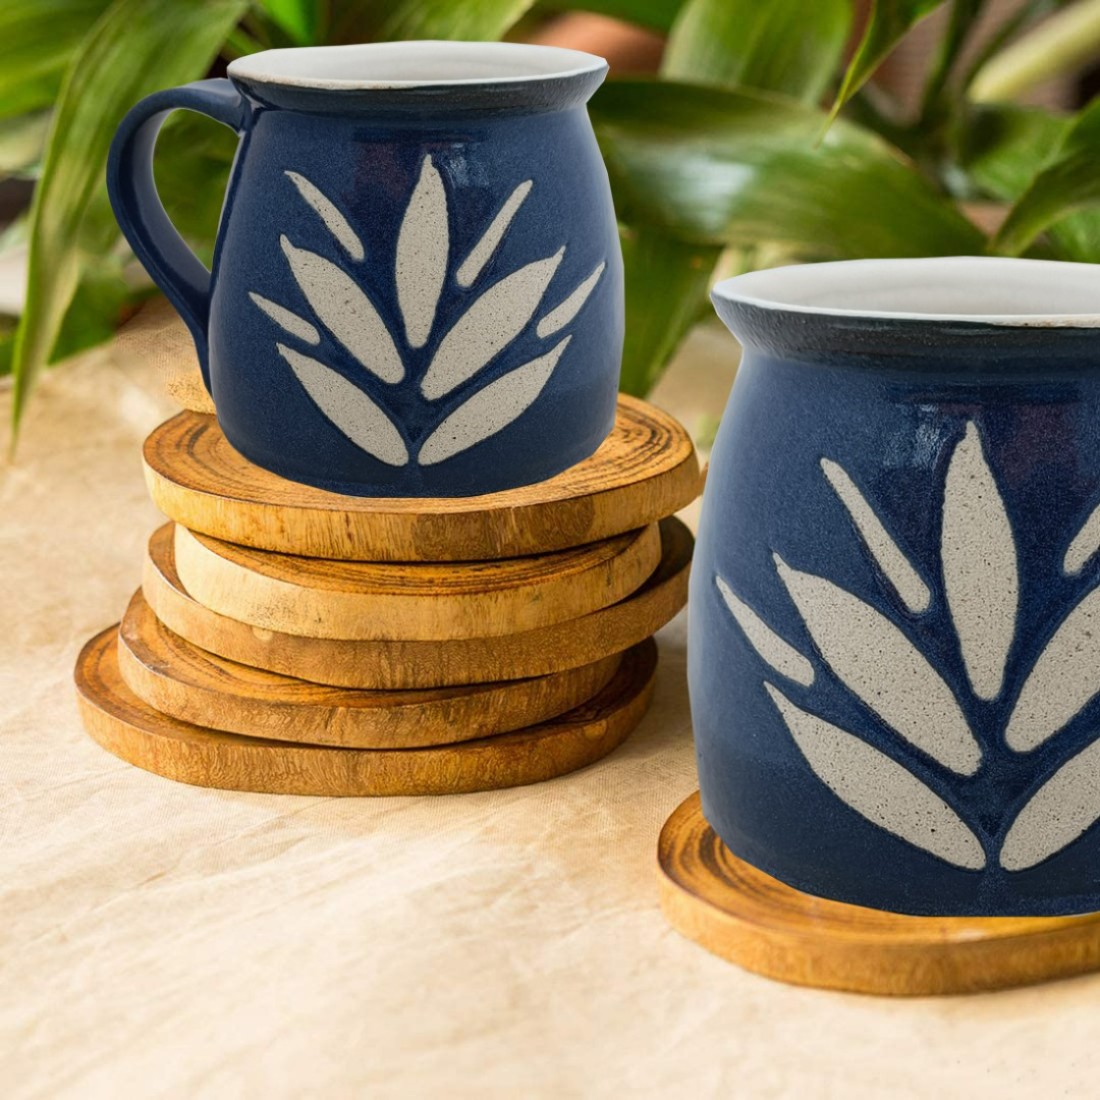 Tillage-Exclusive Stoneware Leaf Printed Espresso Cup Handmade Ceramic Mugs for Milk/Tea/Green Tea and Coffee,( Set of 2) Capacity 250ml 1